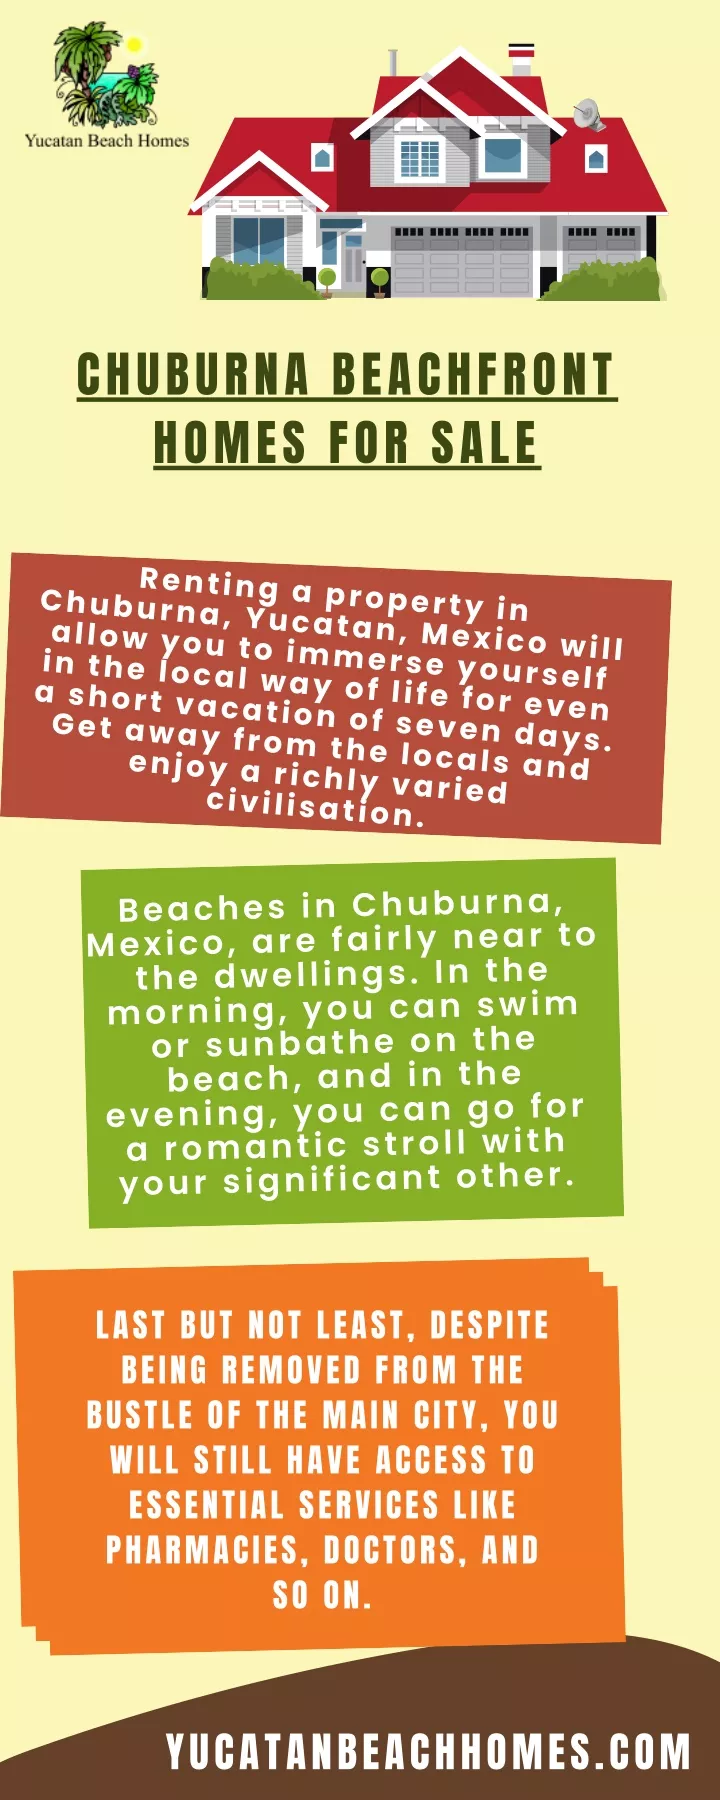 chuburna beachfront homes for sale